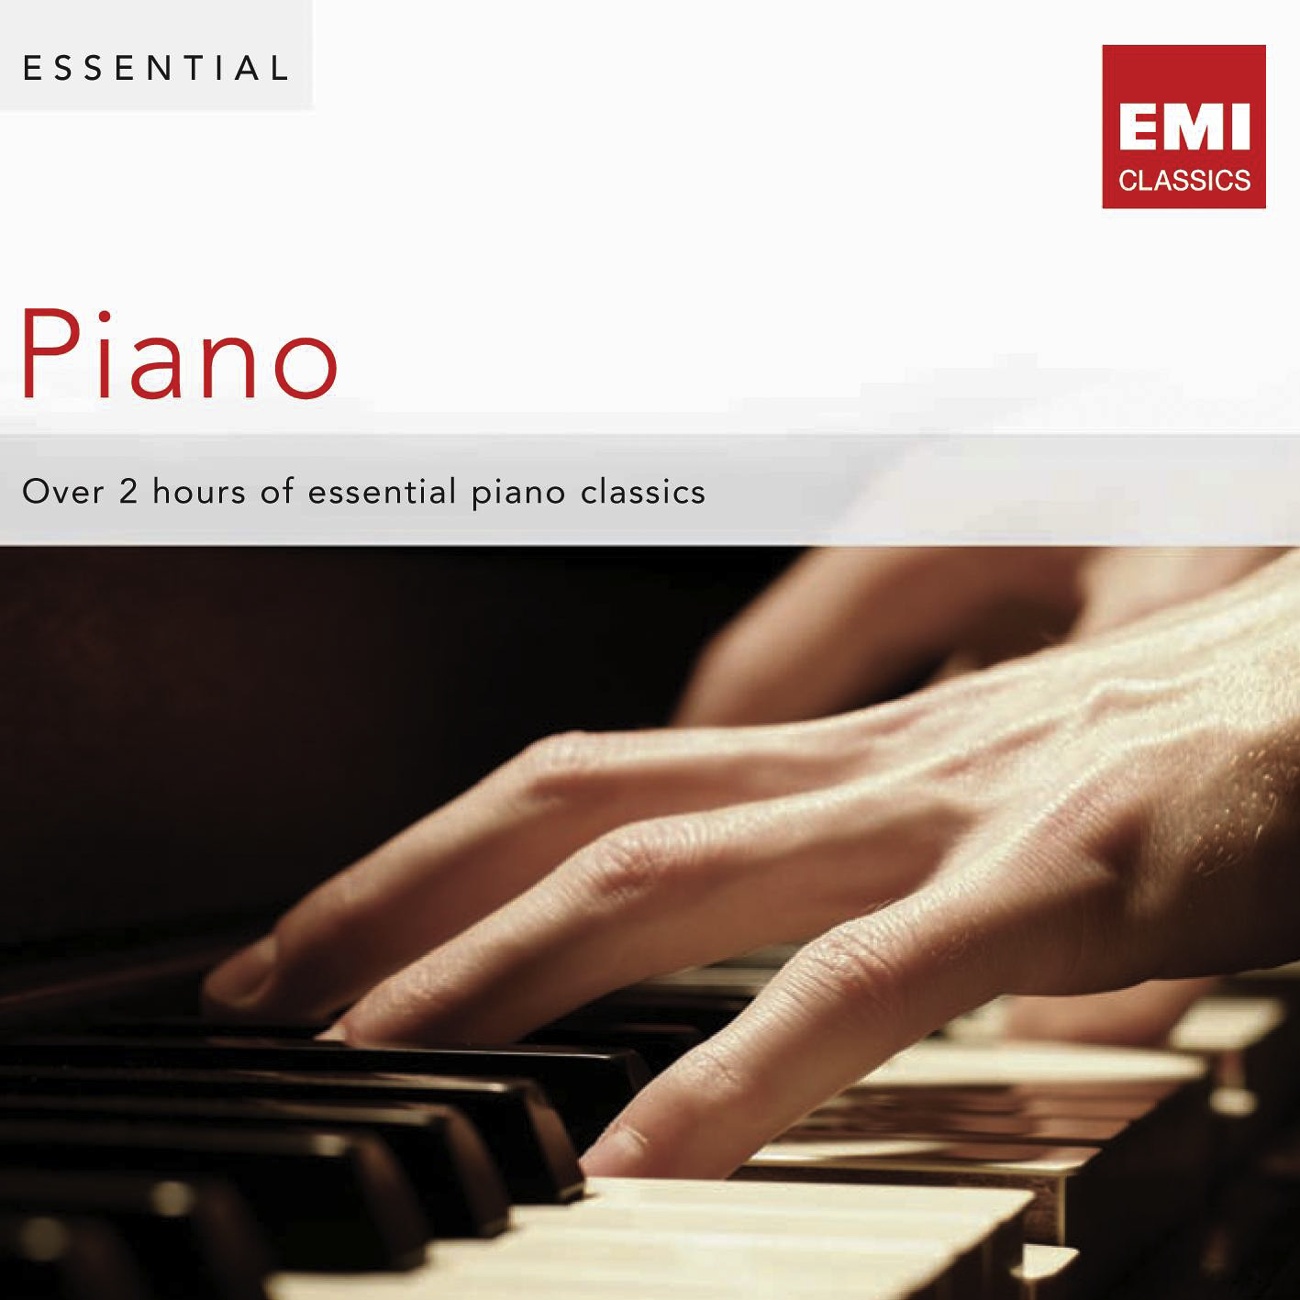 Piano Sonata No. 14 in C sharp minor 'Moonlight' Op. 27 No. 2: I. Adagio sostenuto (excerpt) (arr. Norman Bates, pub. EMI Music